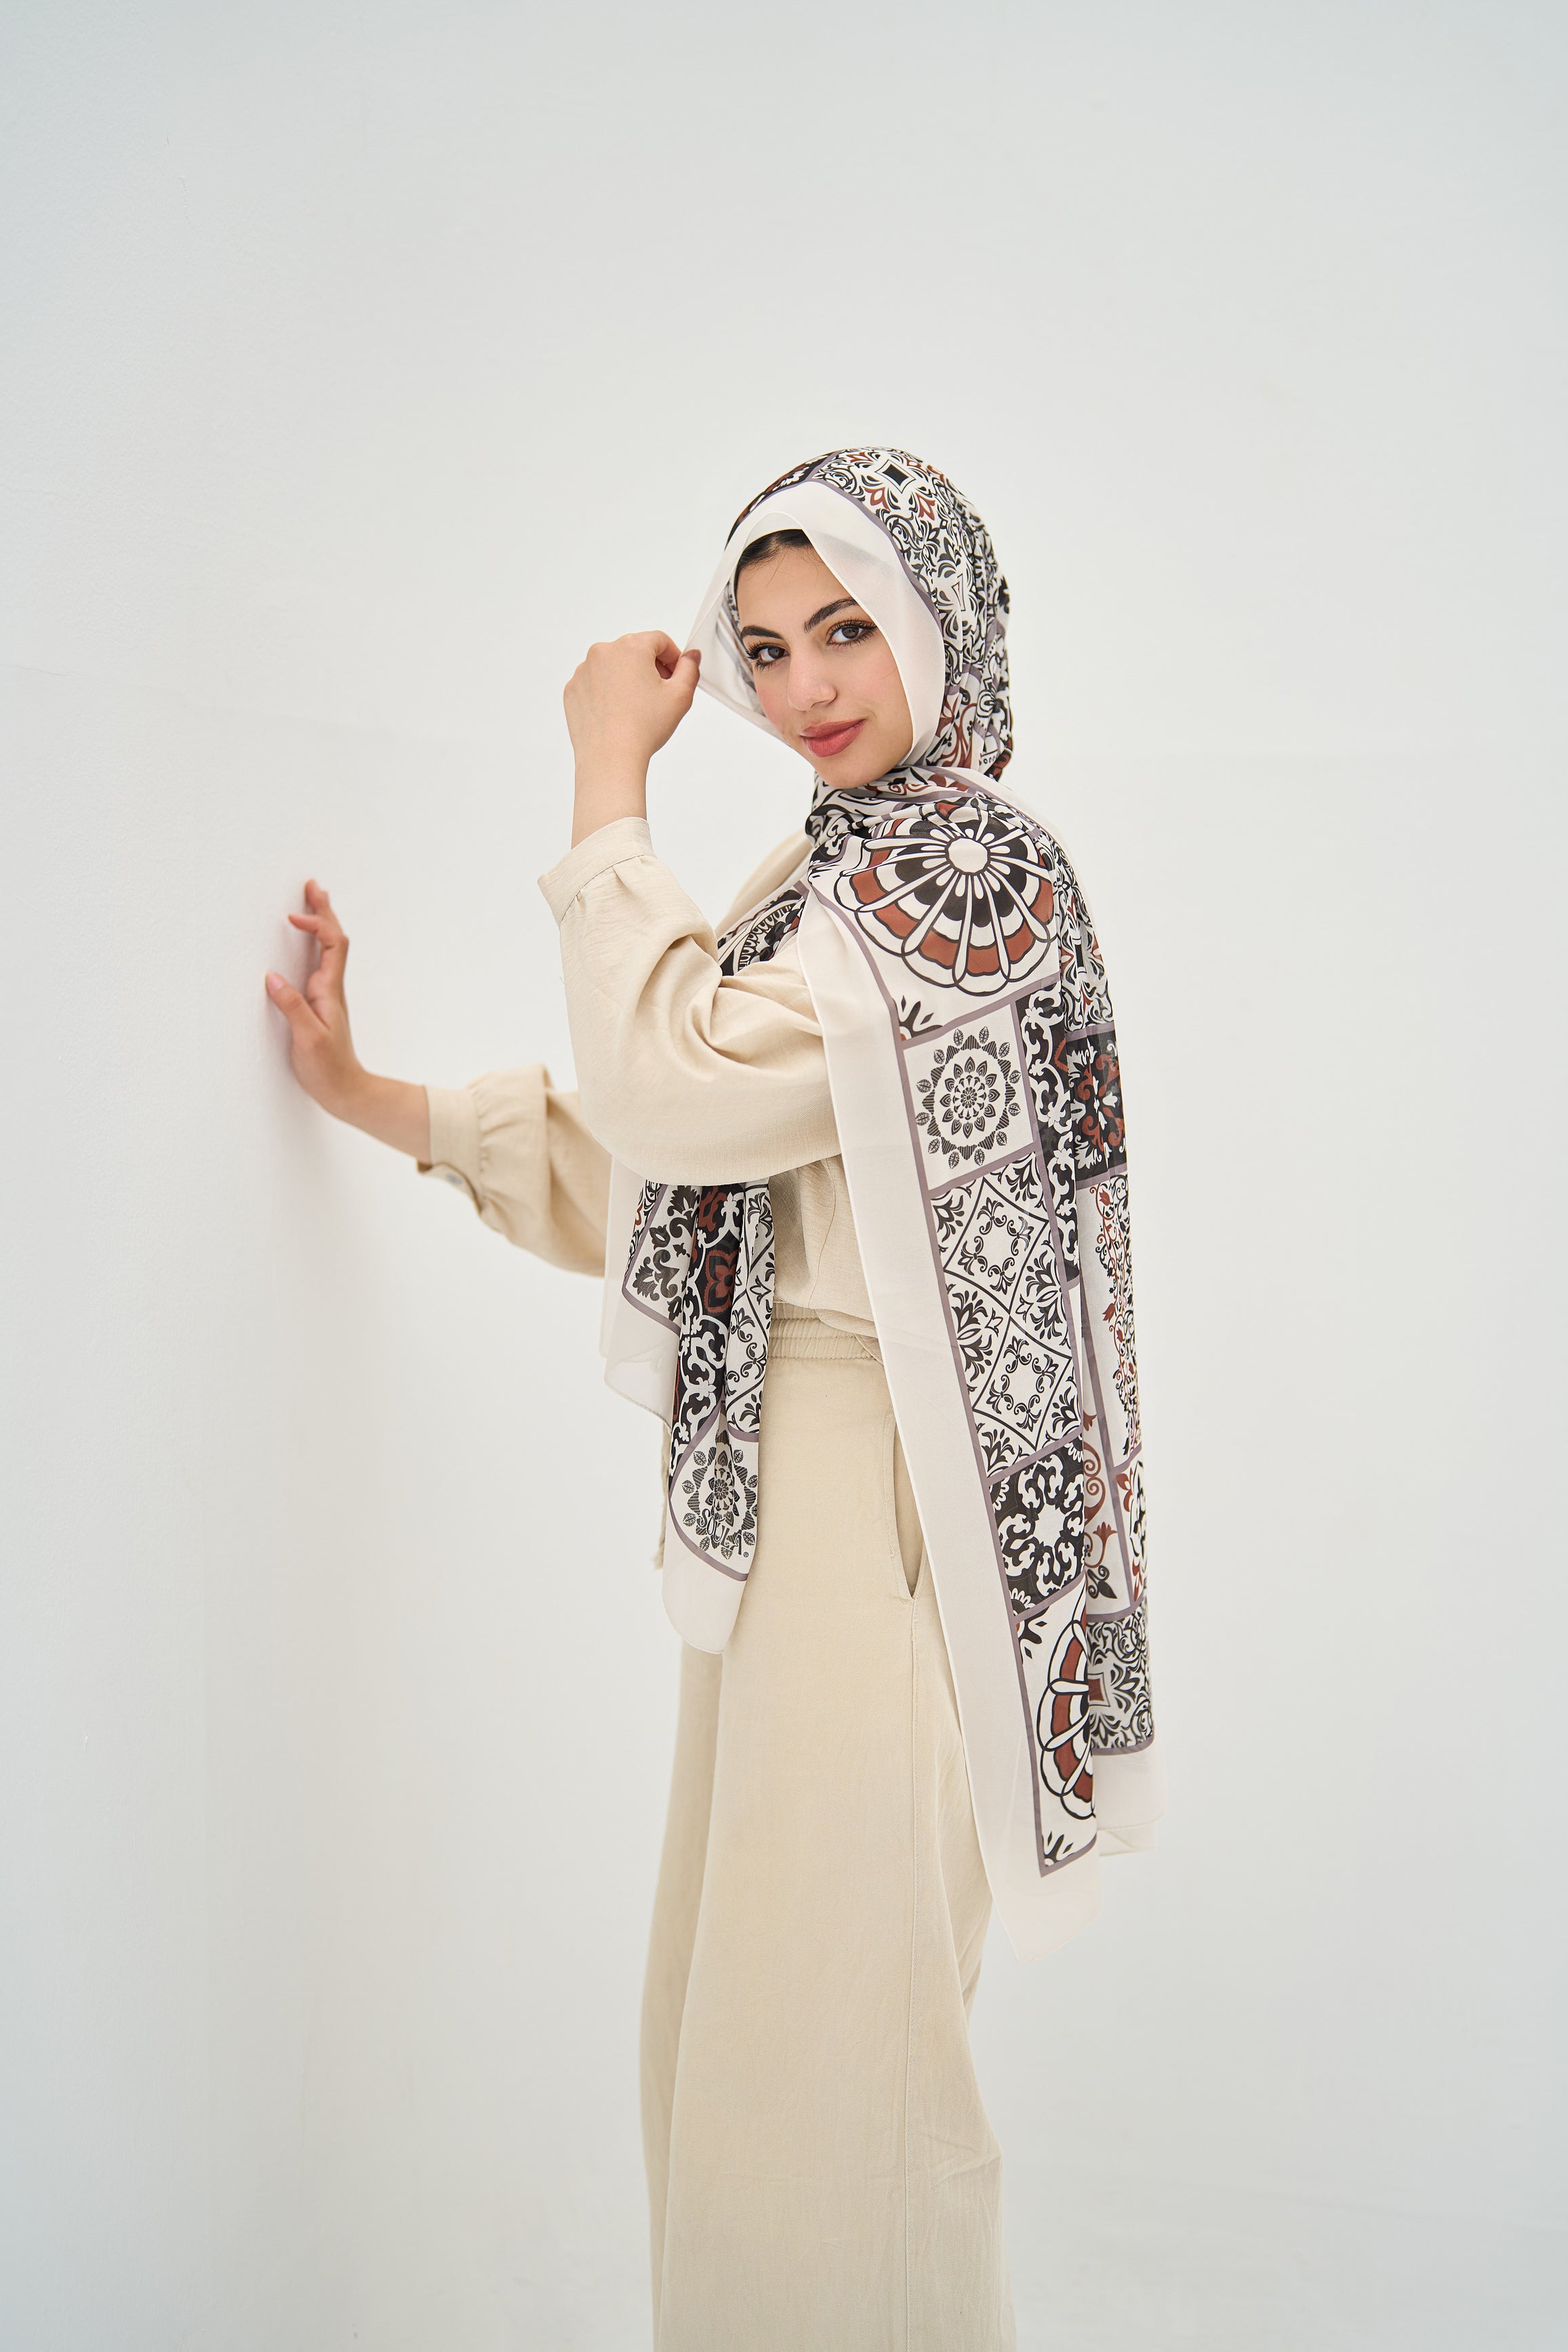 Mosaic Hijab